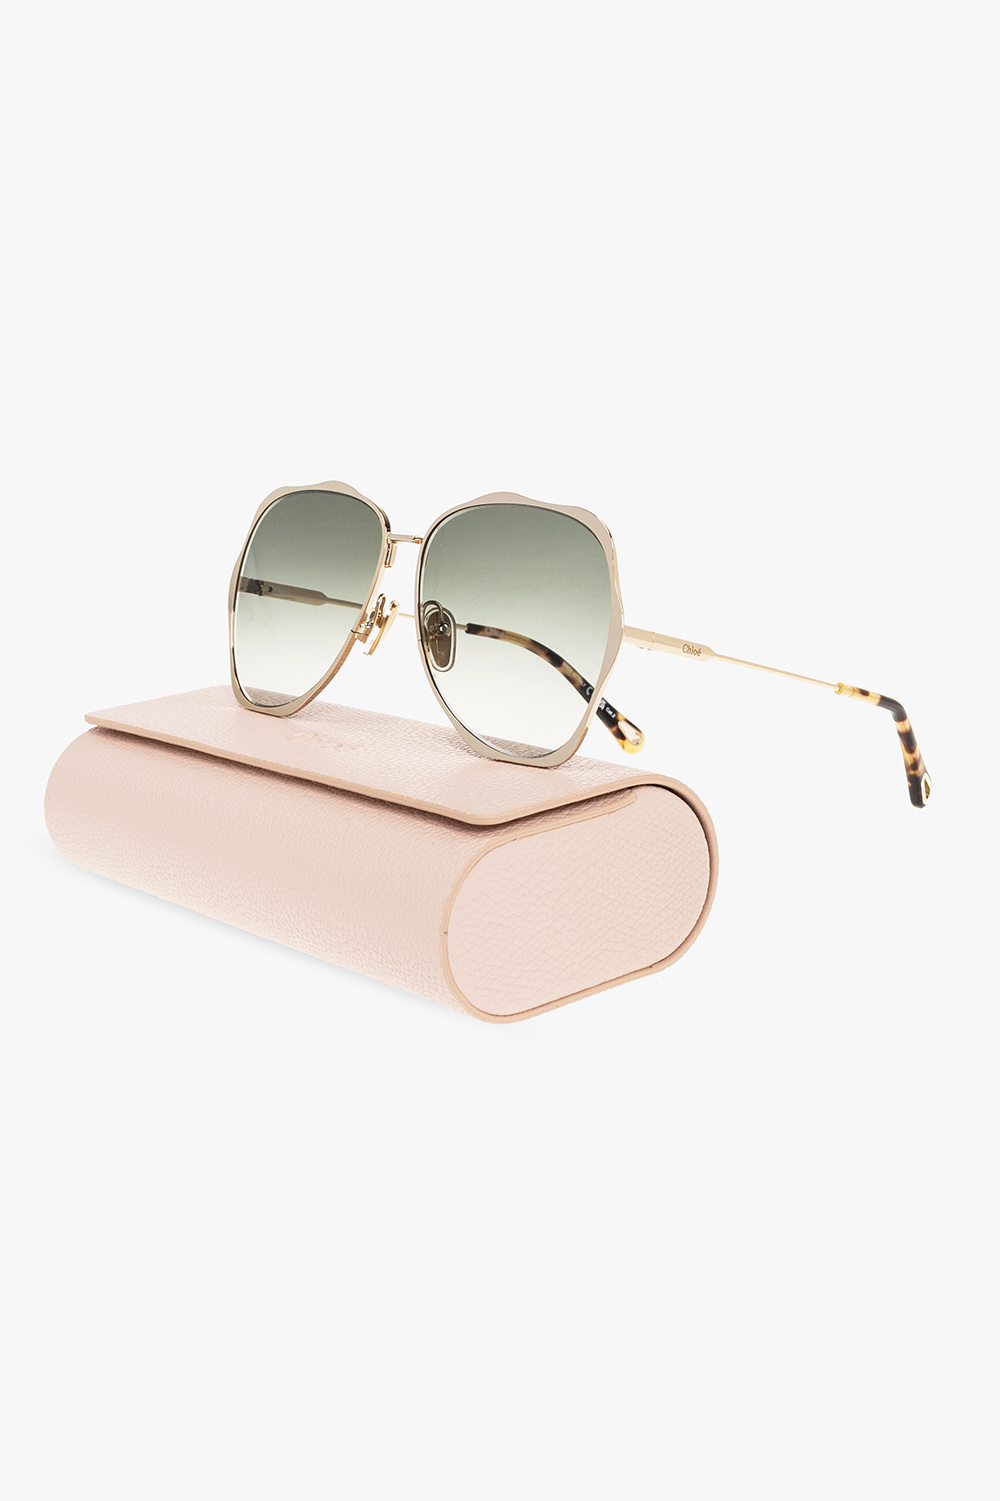 Chloé block sunglasses